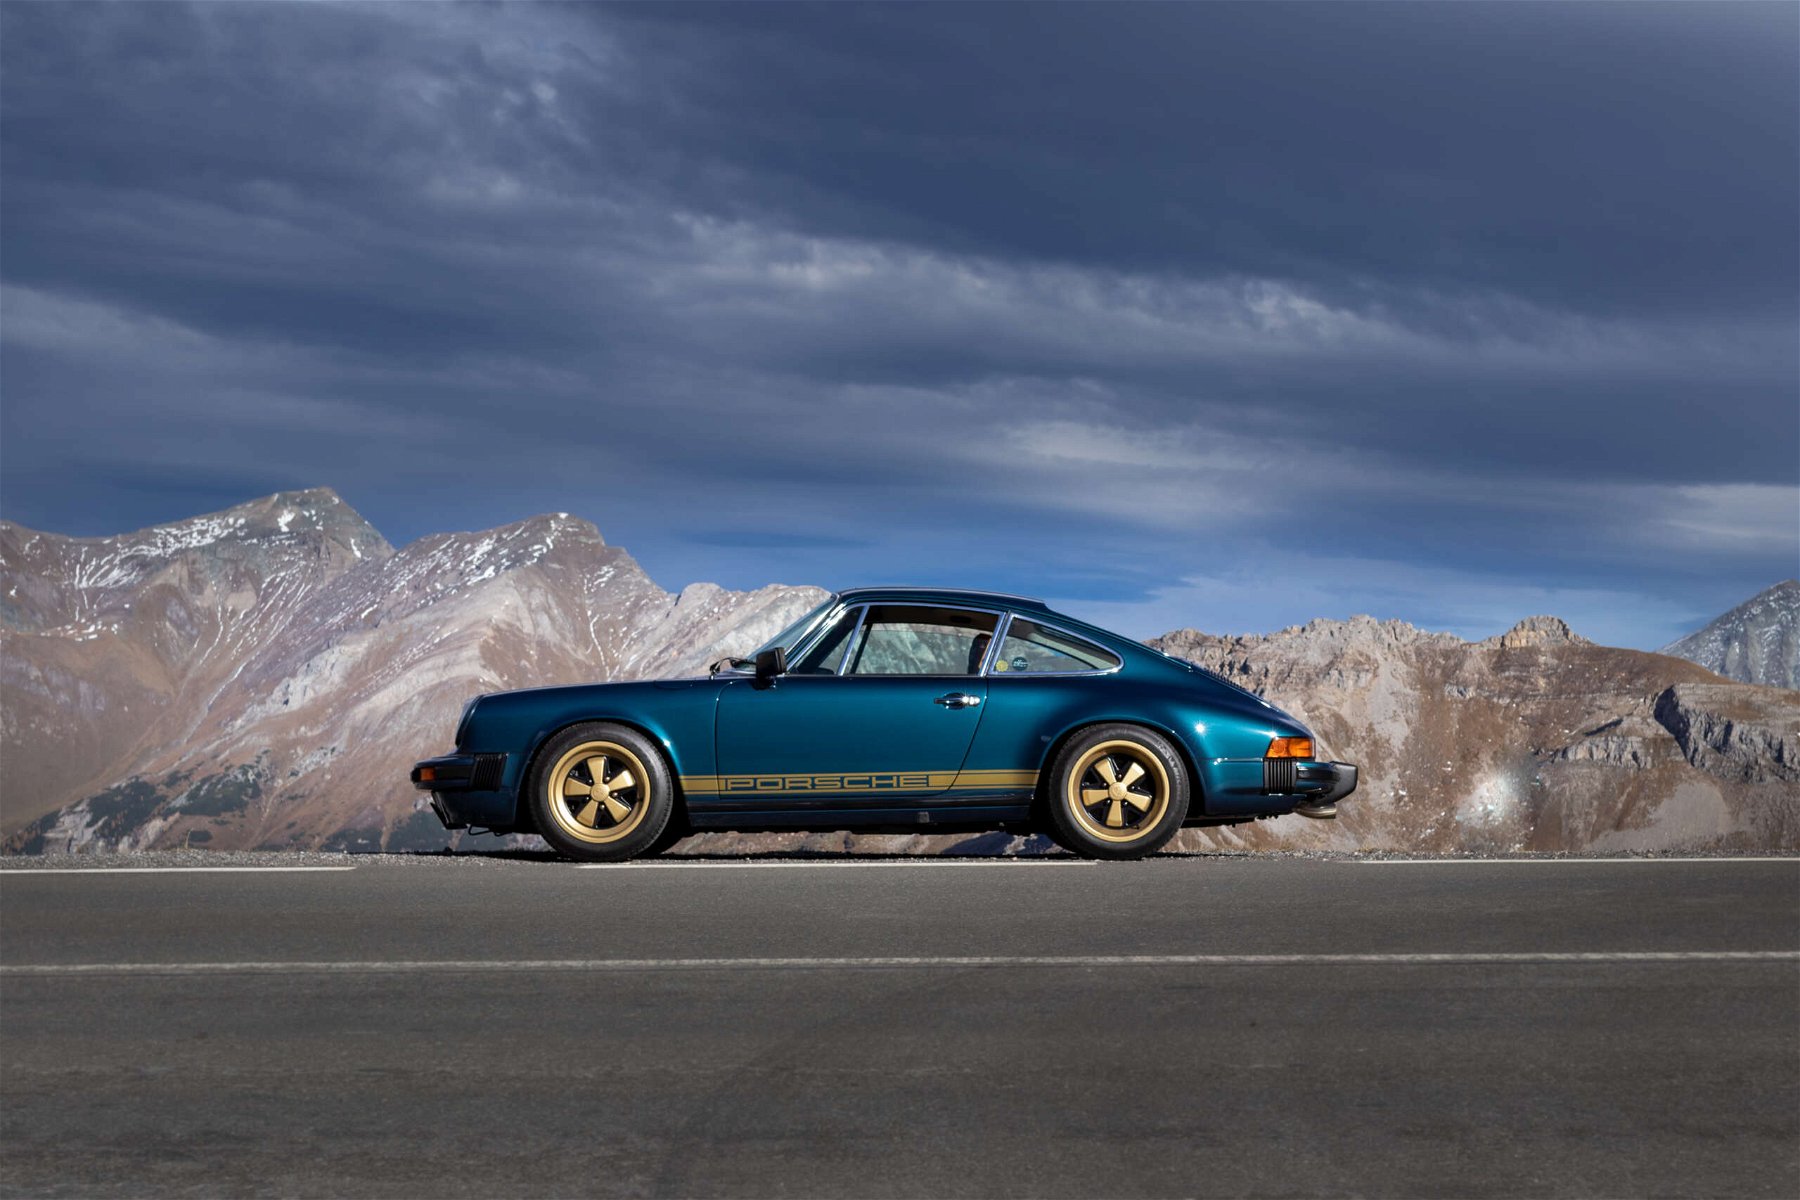 The Porsche 911 SC – Allegedly the last 911